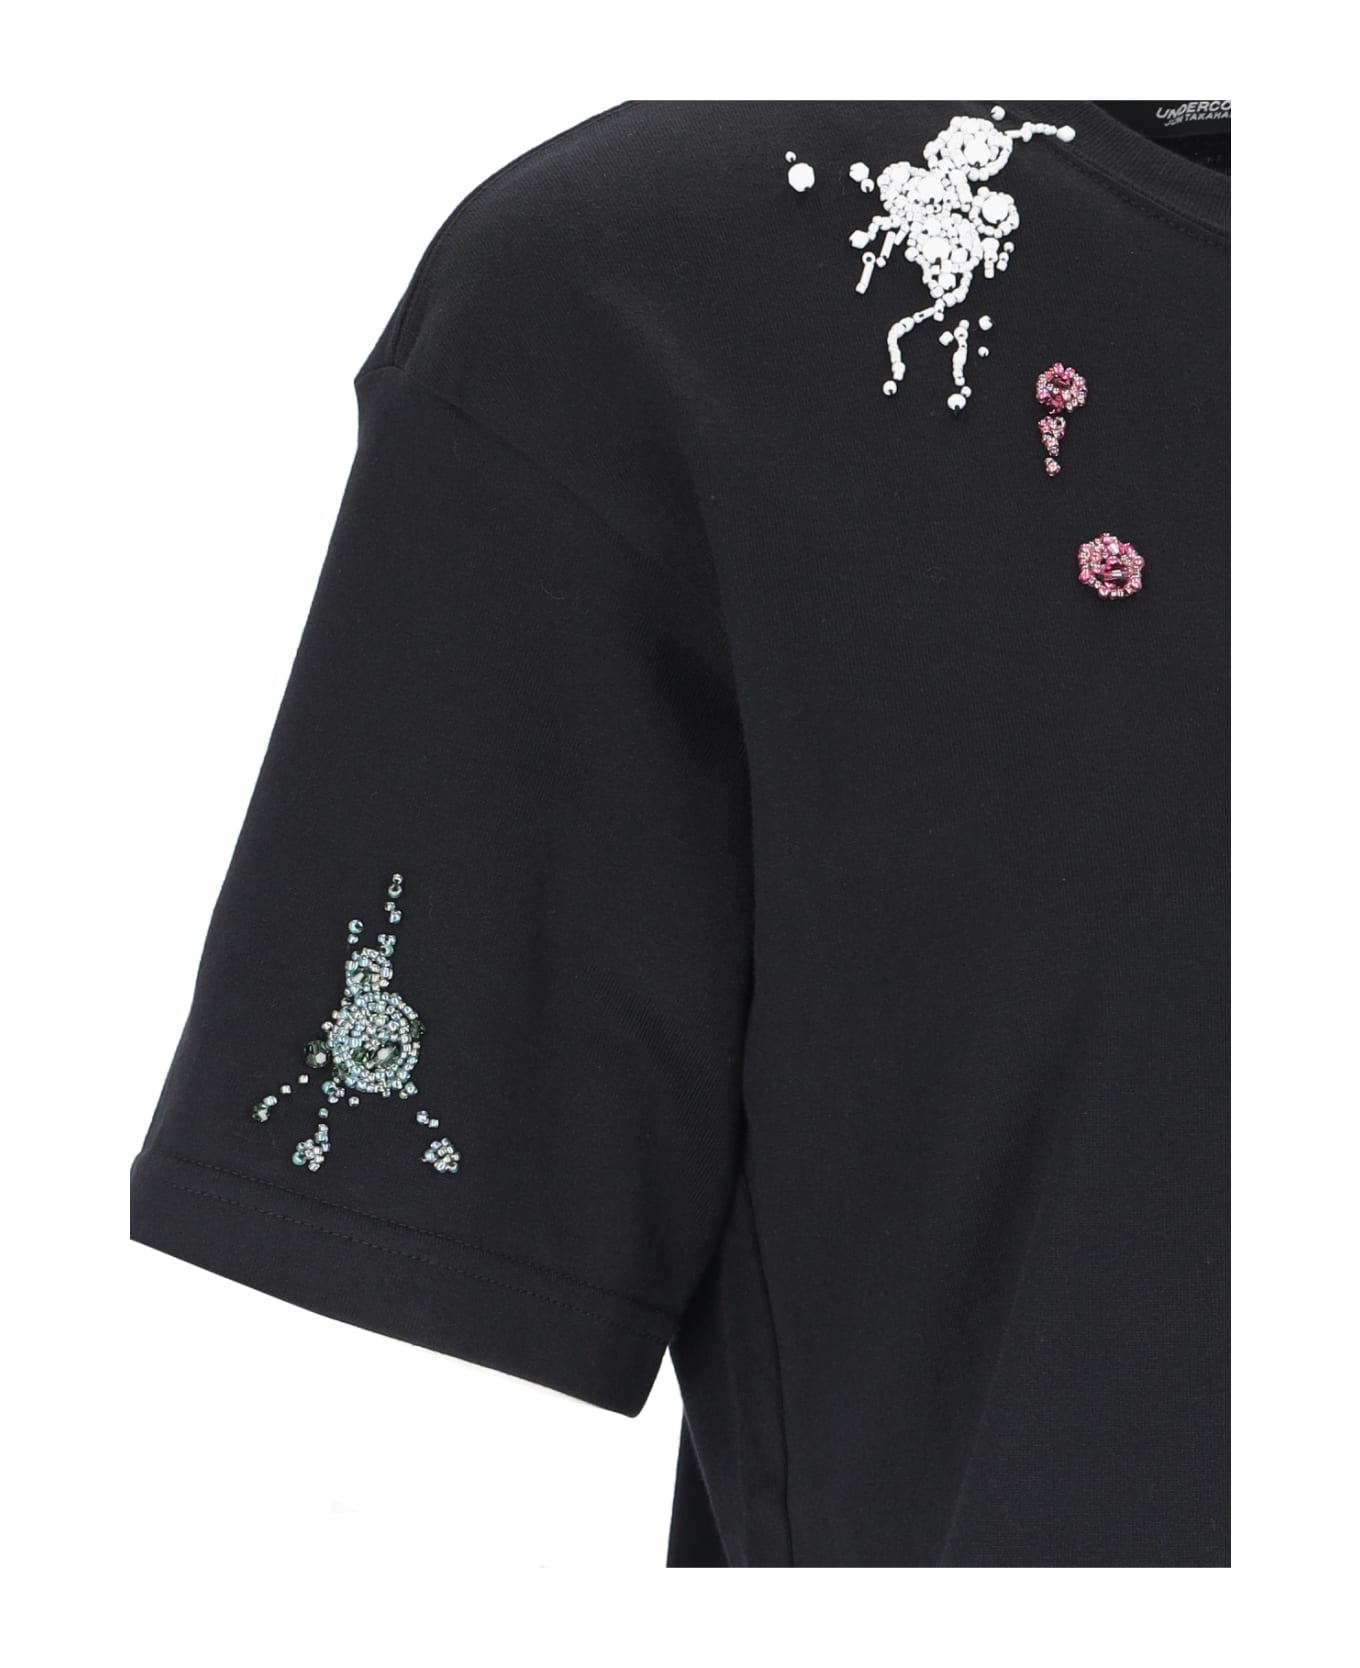 Undercover Jun Takahashi Embroidery Detail T-shirt - Black  